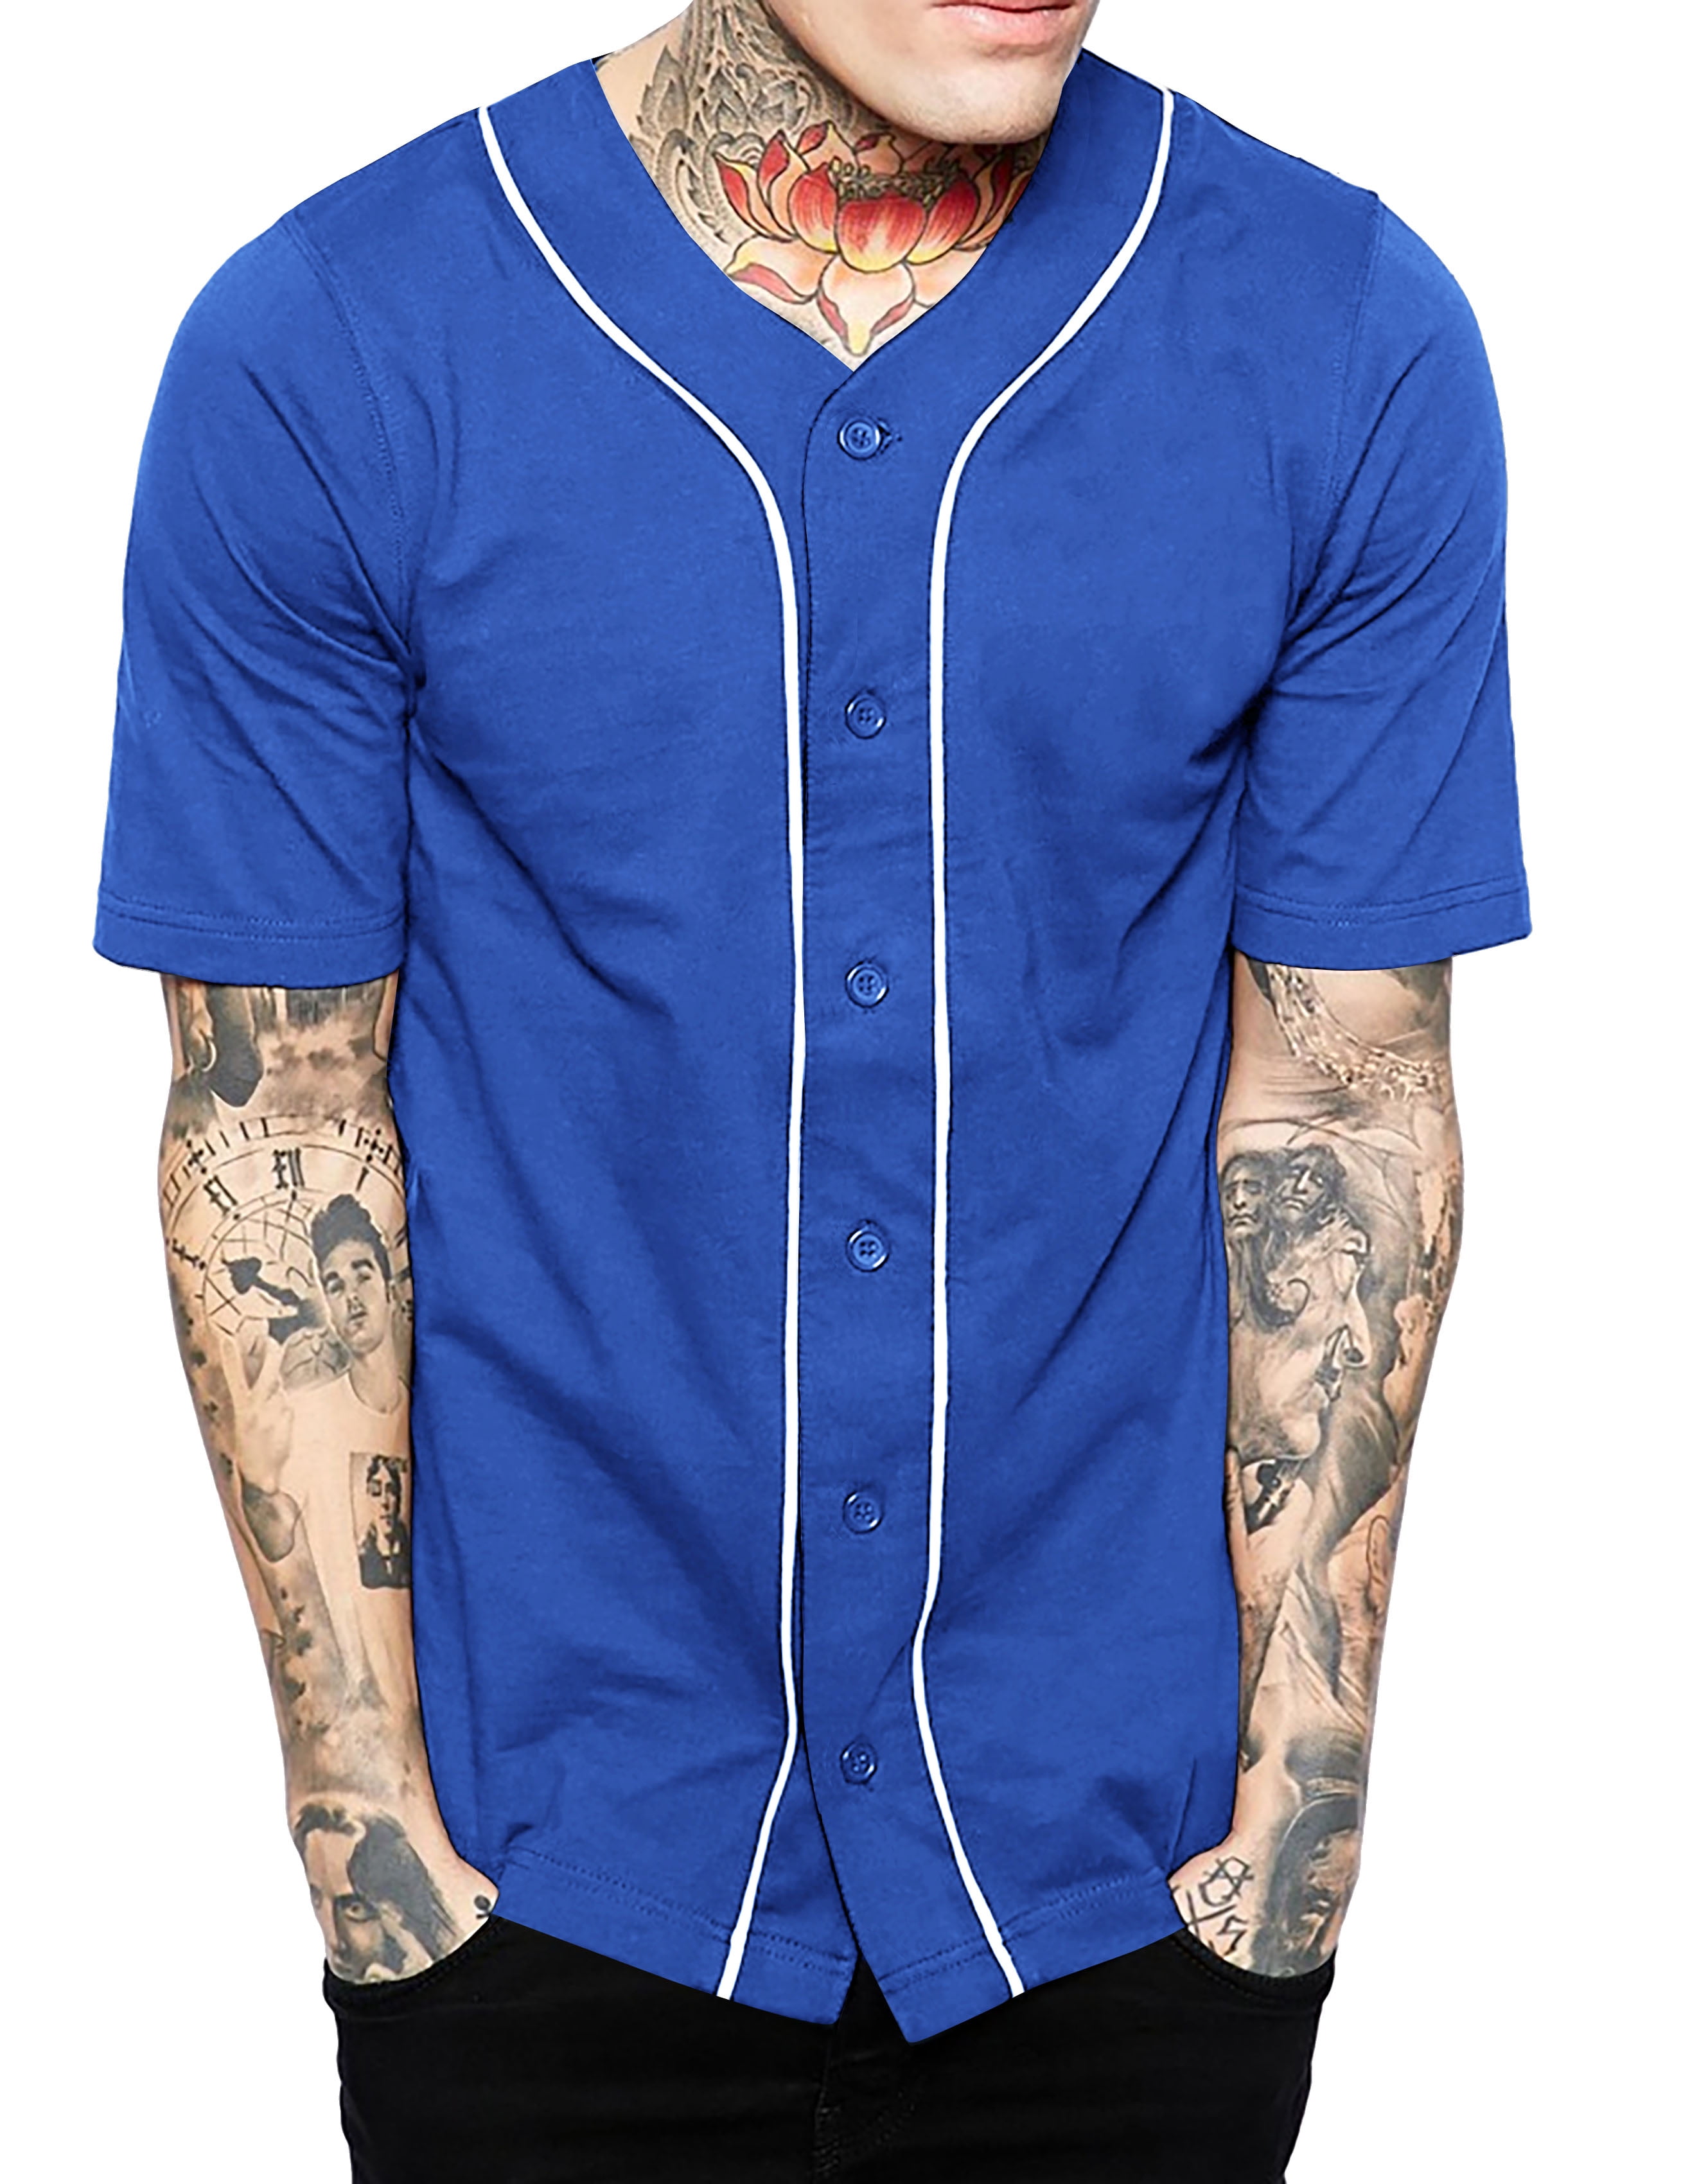 Ma Croix Made in USA Premium Baseball Jersey Active Button Shirt Uniform for Men Women Juniors Family Made in USA 